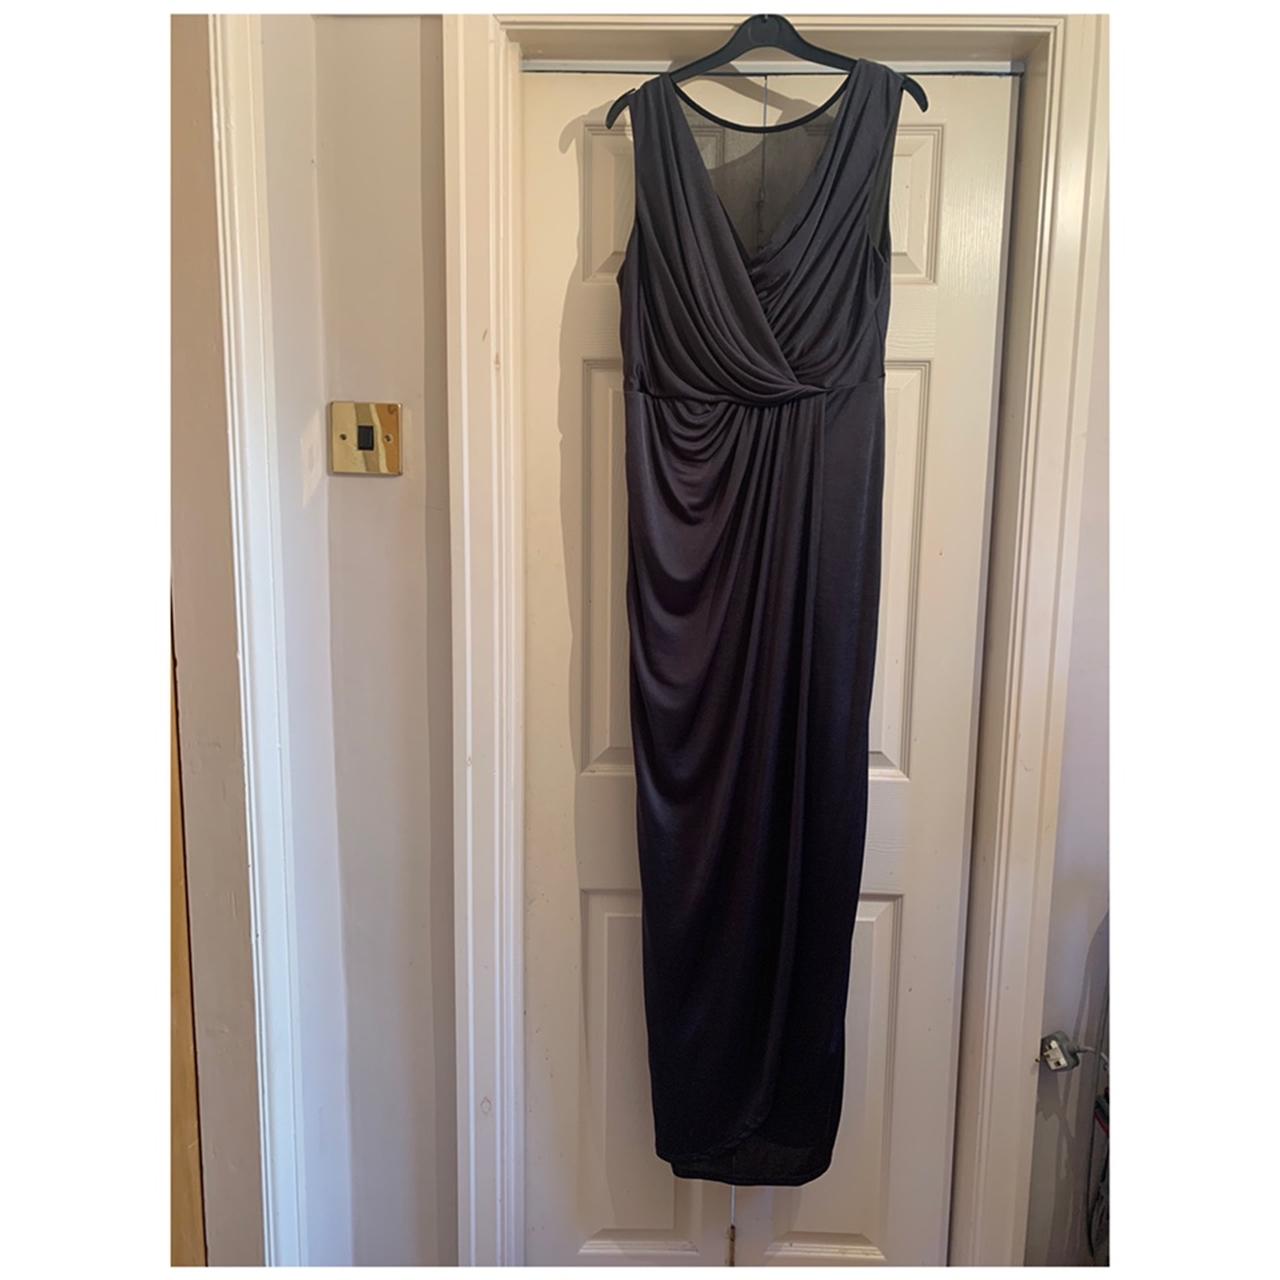 Prom dress / ball gown / bridesmaid dress size 12... - Depop